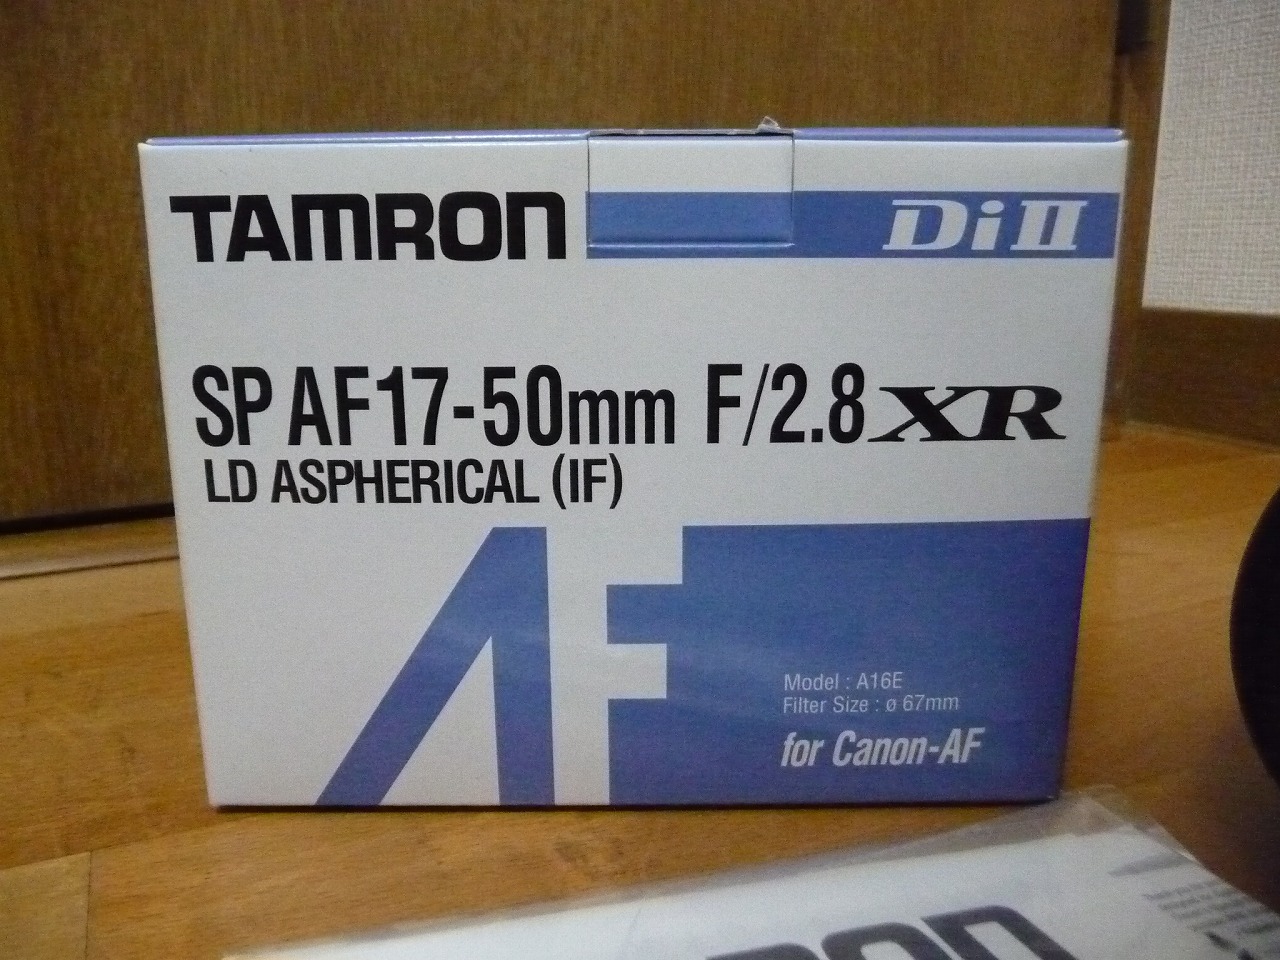 SP AF 17-50mm F/2.8 XR Di II LD Aspherical (IF)